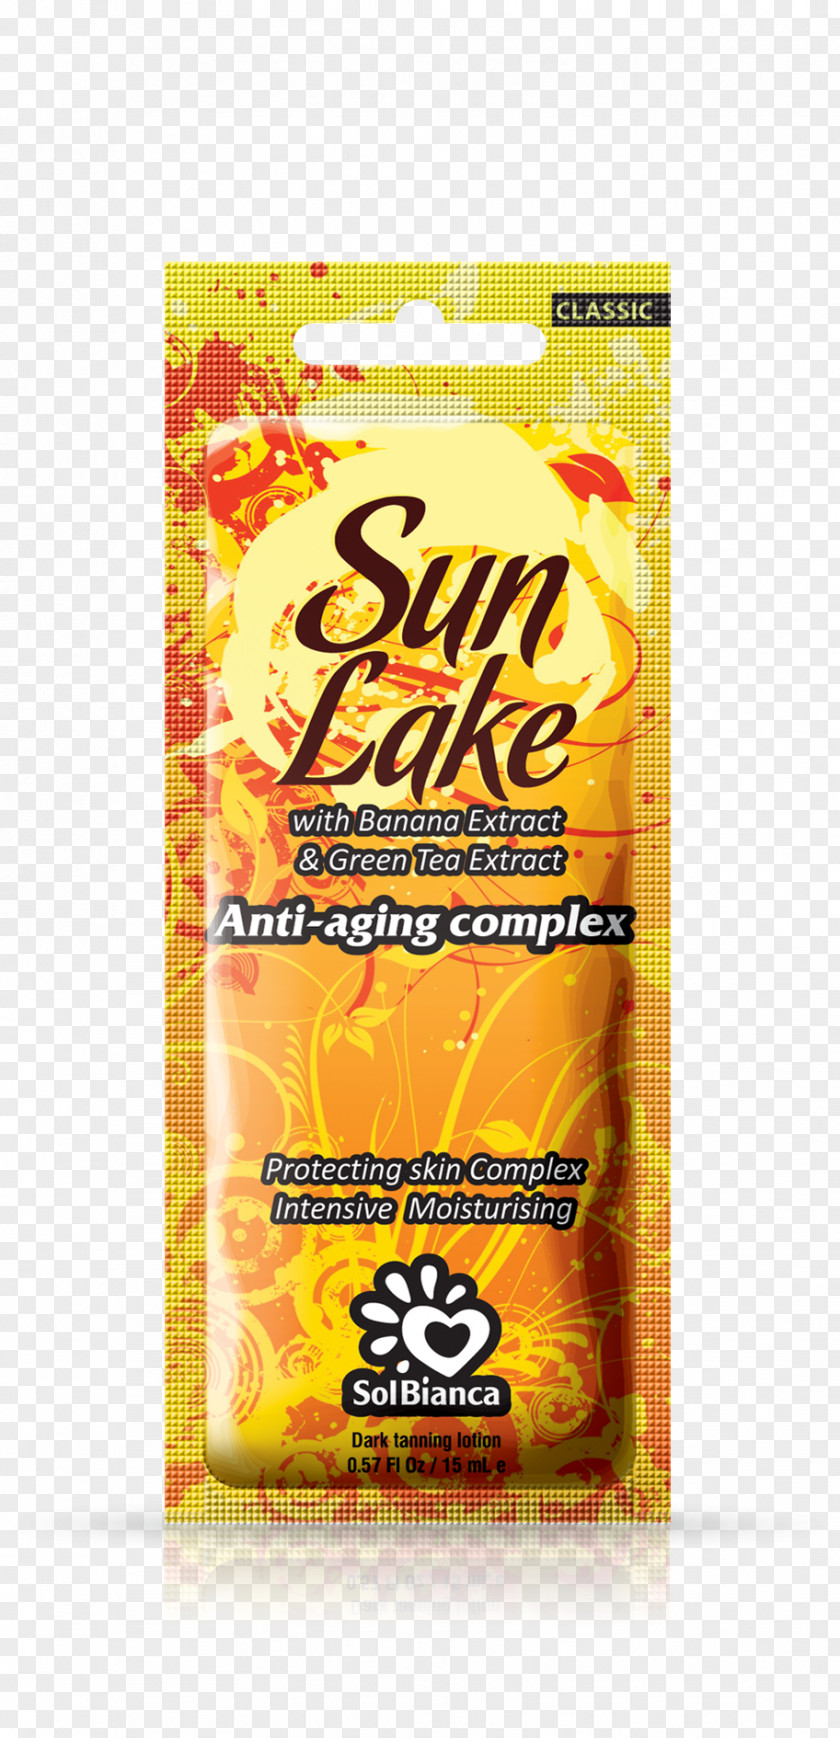 Sun Block Sunscreen Tanning Cosmetics Cream Extract PNG